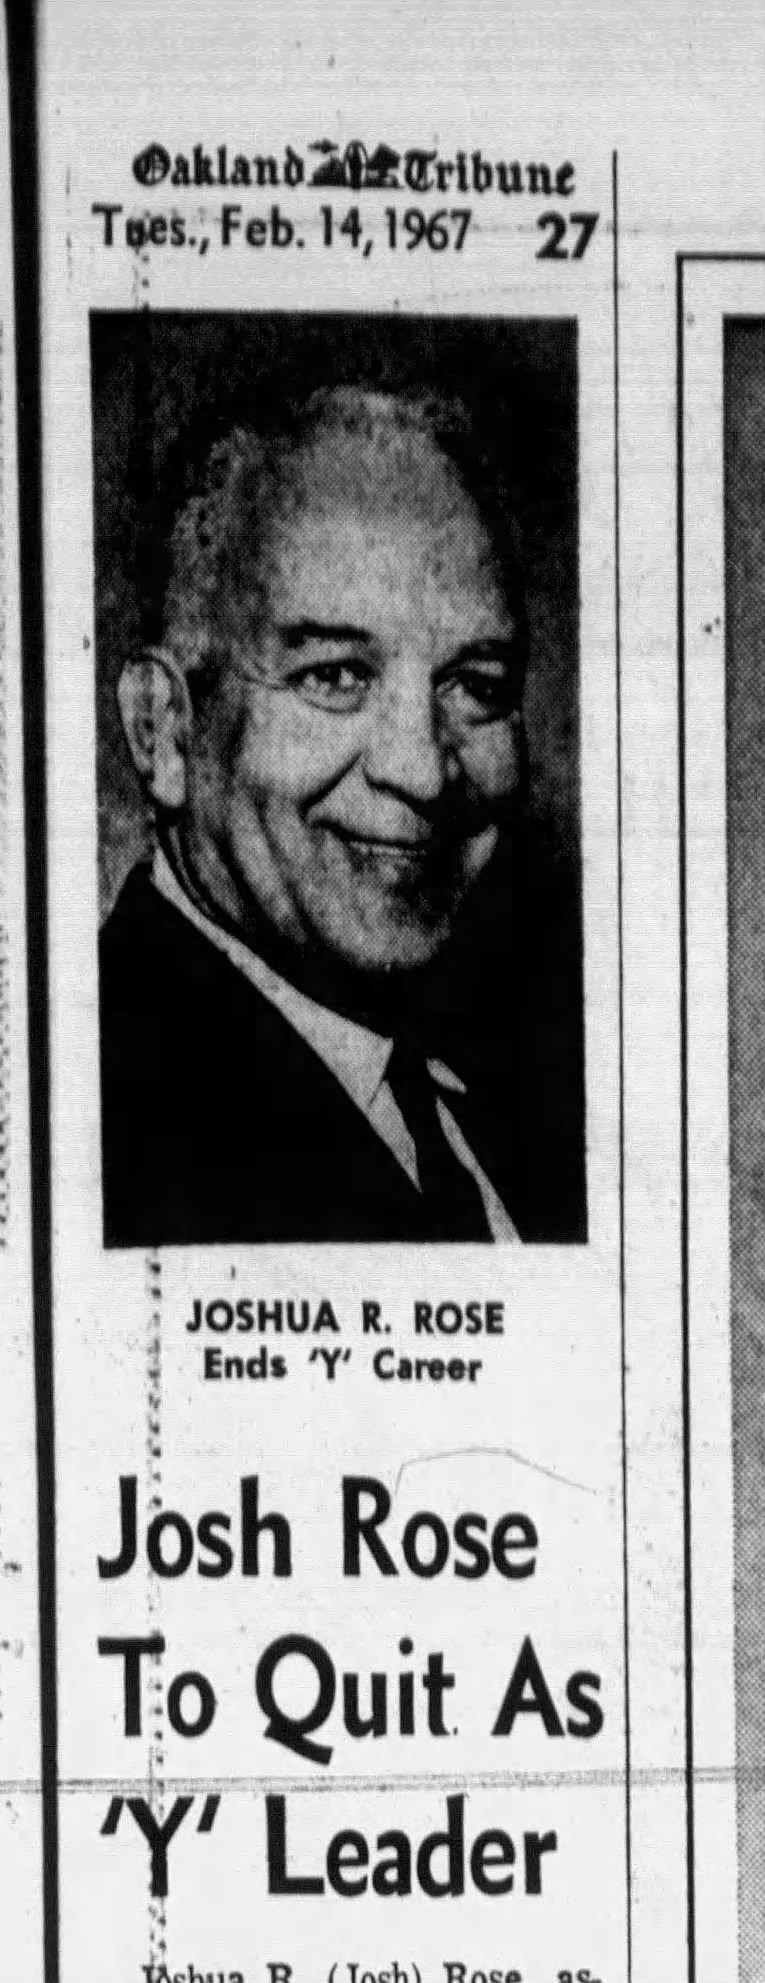 Josh Rose to Quit as Y Leader Feb 14 1967